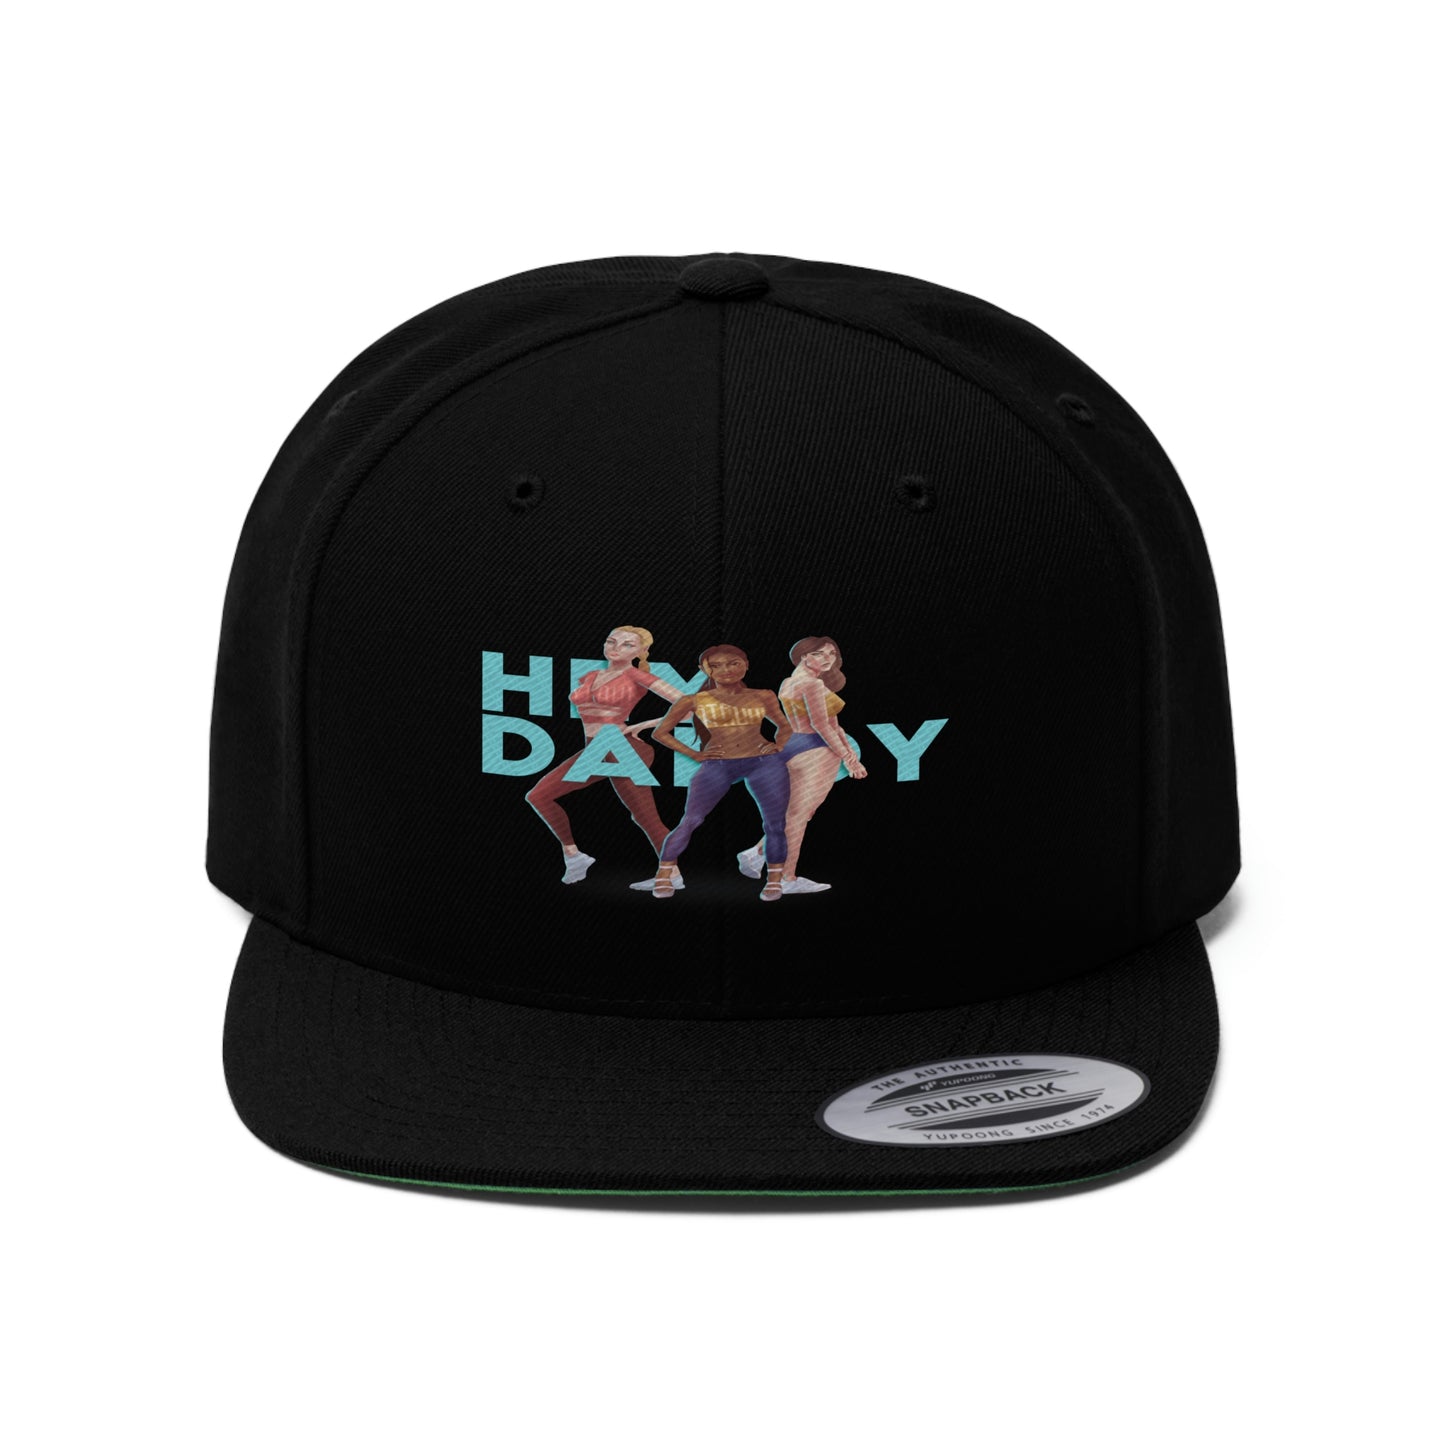 Hey Daddy Flat Bill Hat - Imaginary Wear